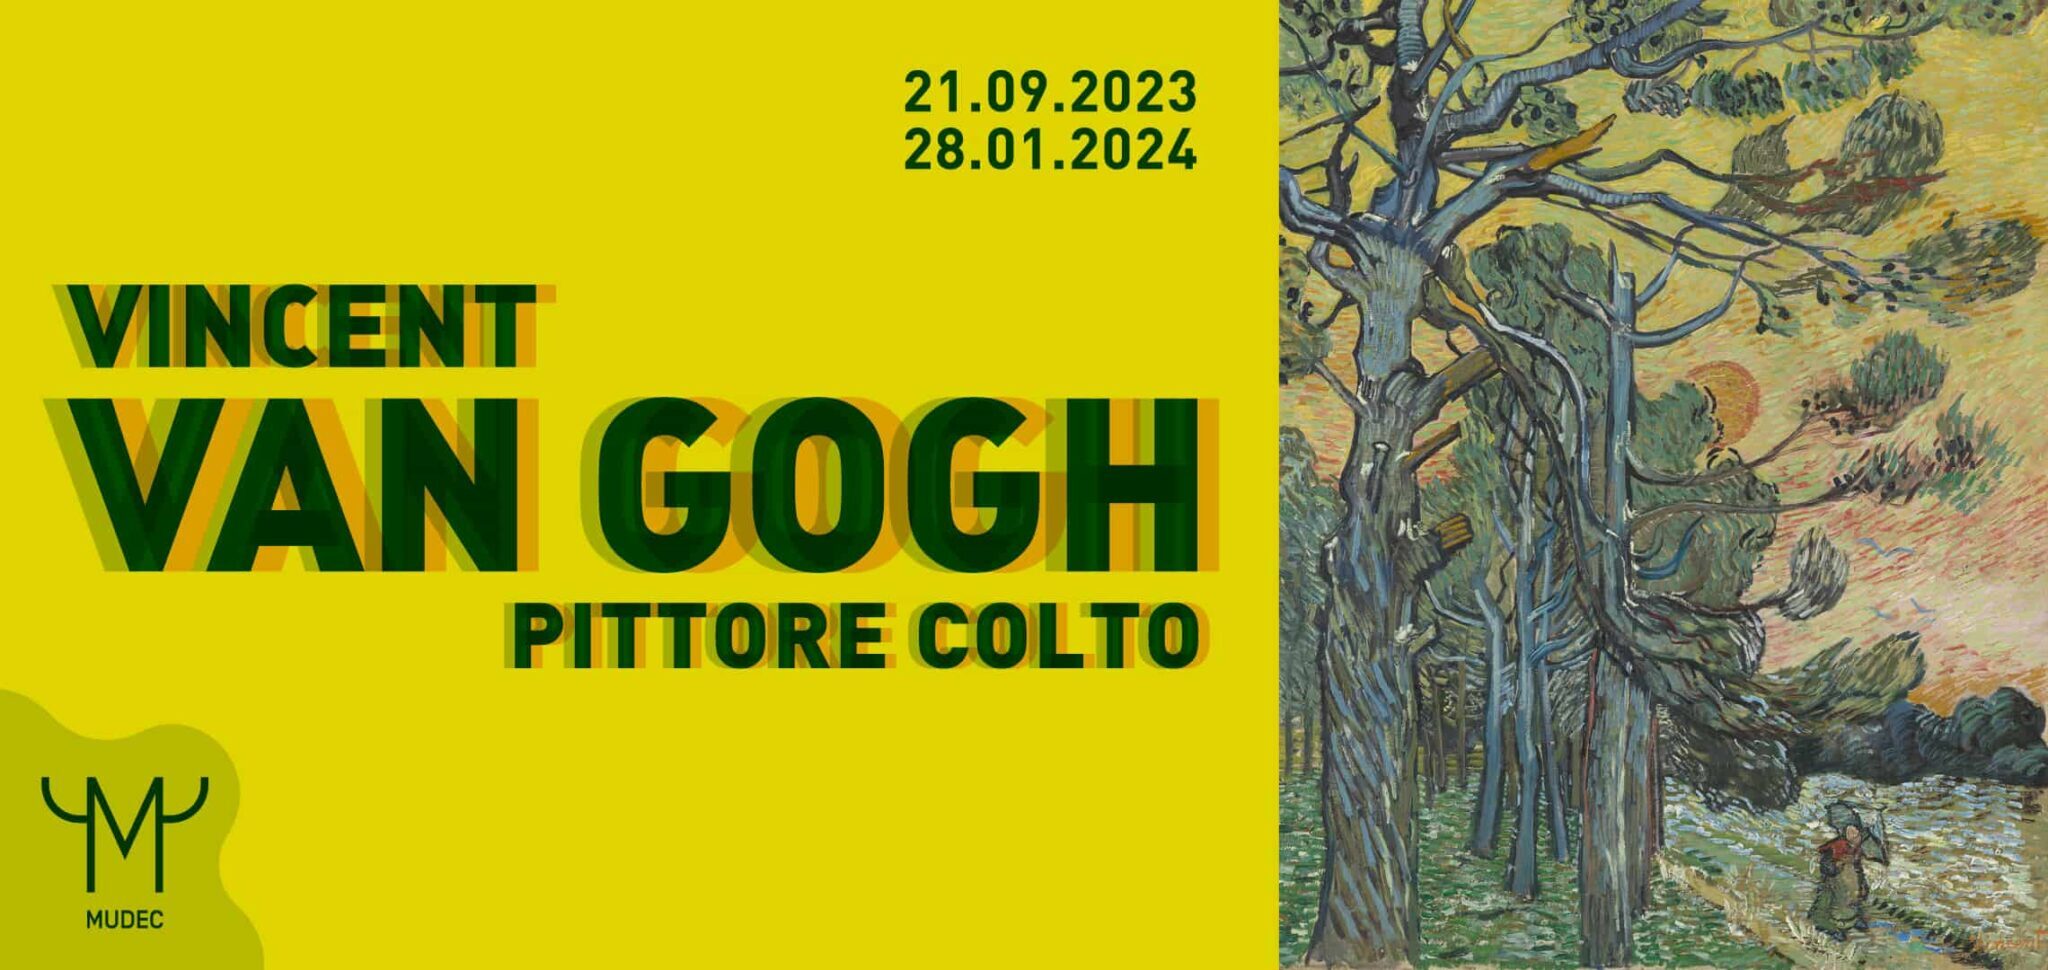 Vincent van Gogh Pittore colto in mostra a Milano  al MUDEC